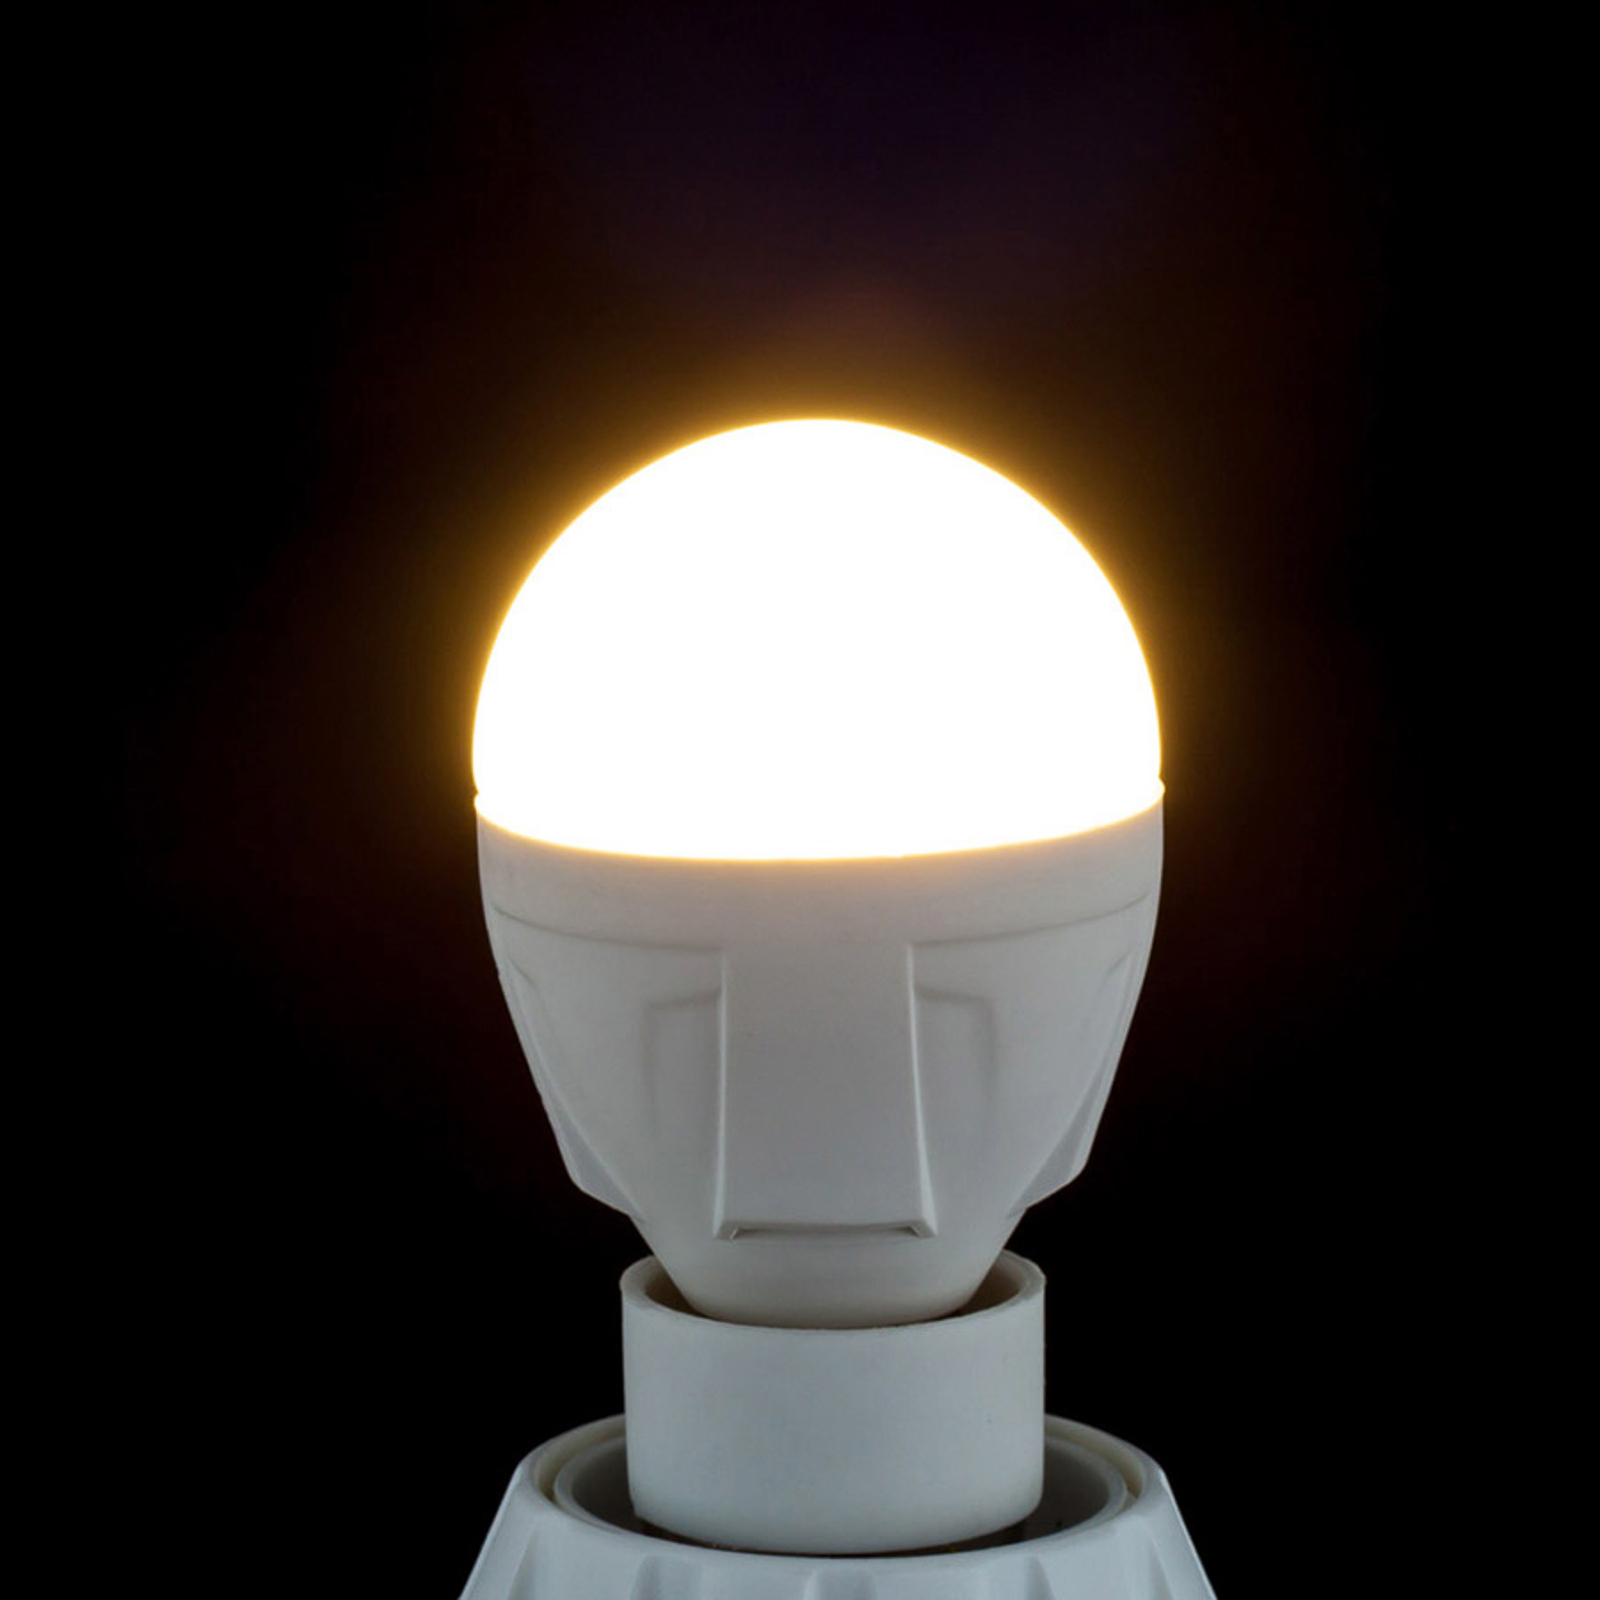 Teardrop LED bulb E14 4.9 W 830 470 lumens 2-pack